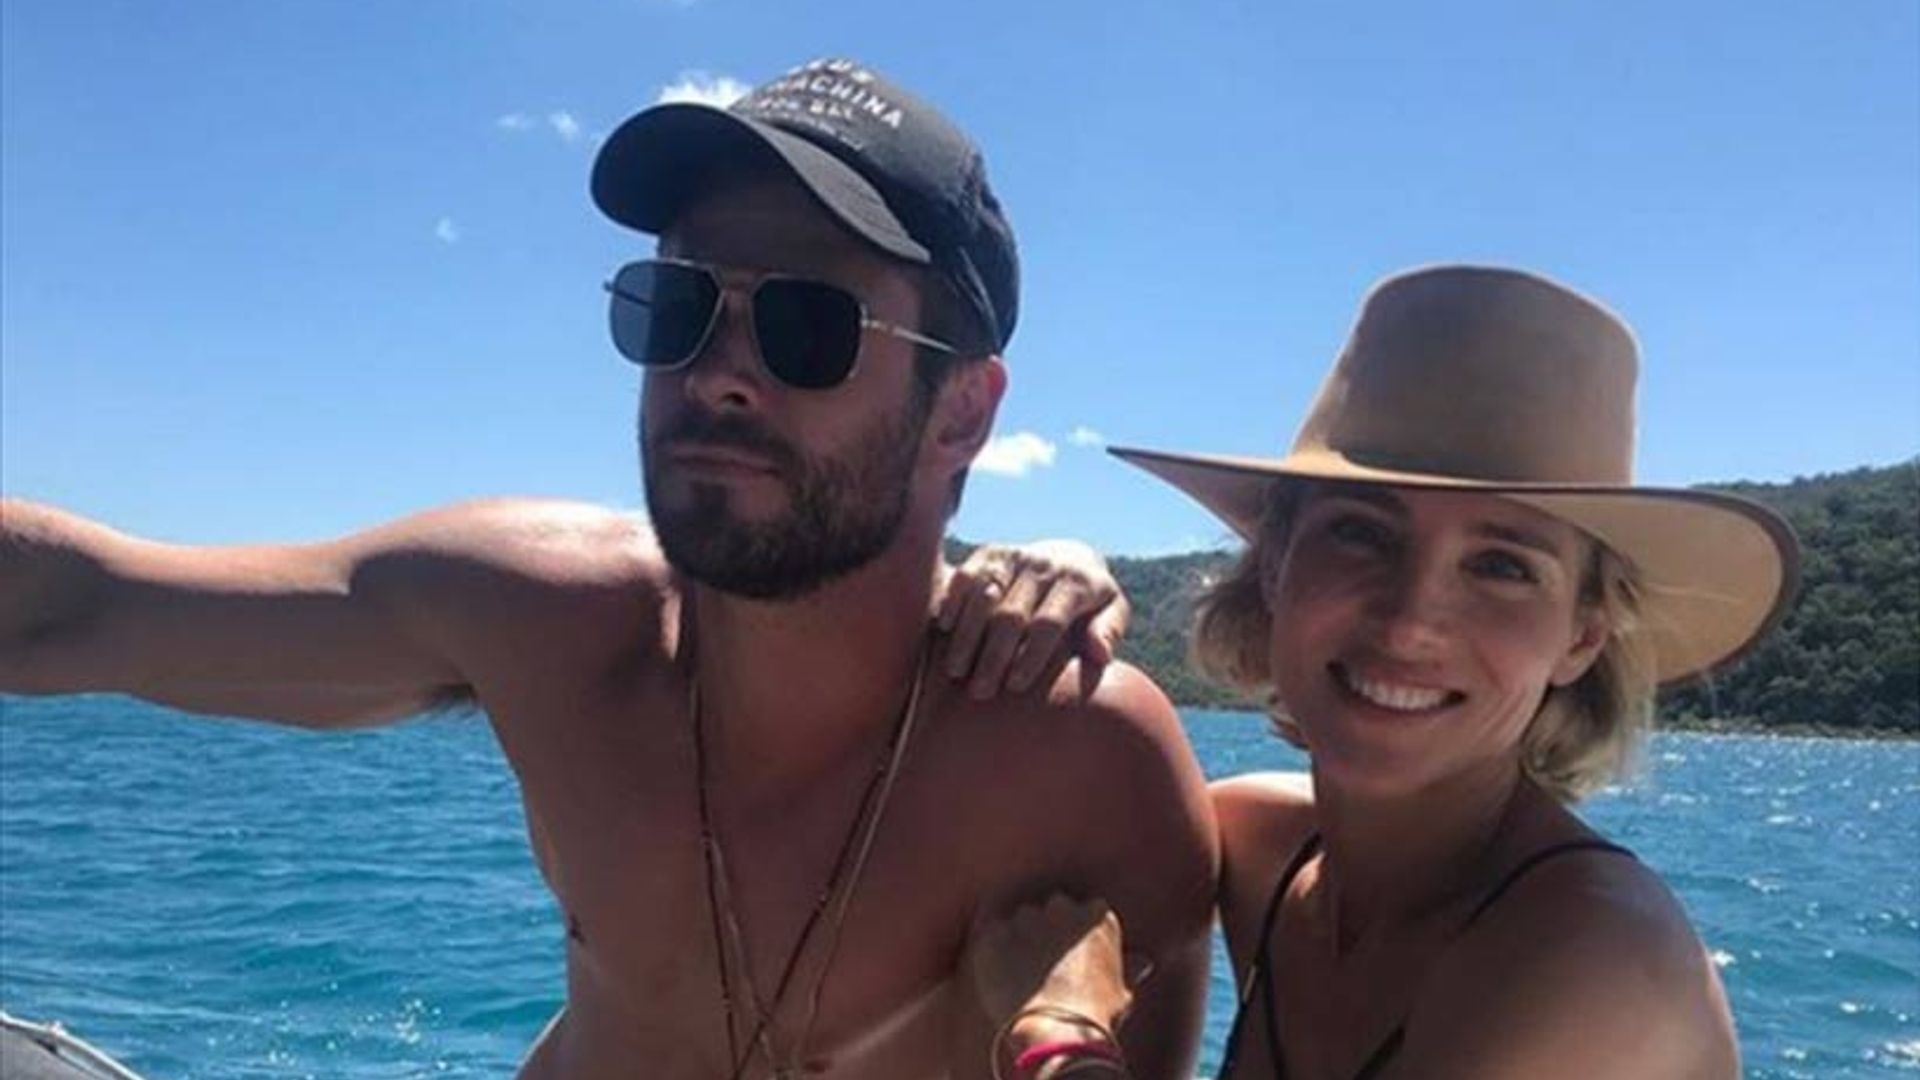 Inside the luxury Australian resort where Chris Hemsworth celebrated his birthday